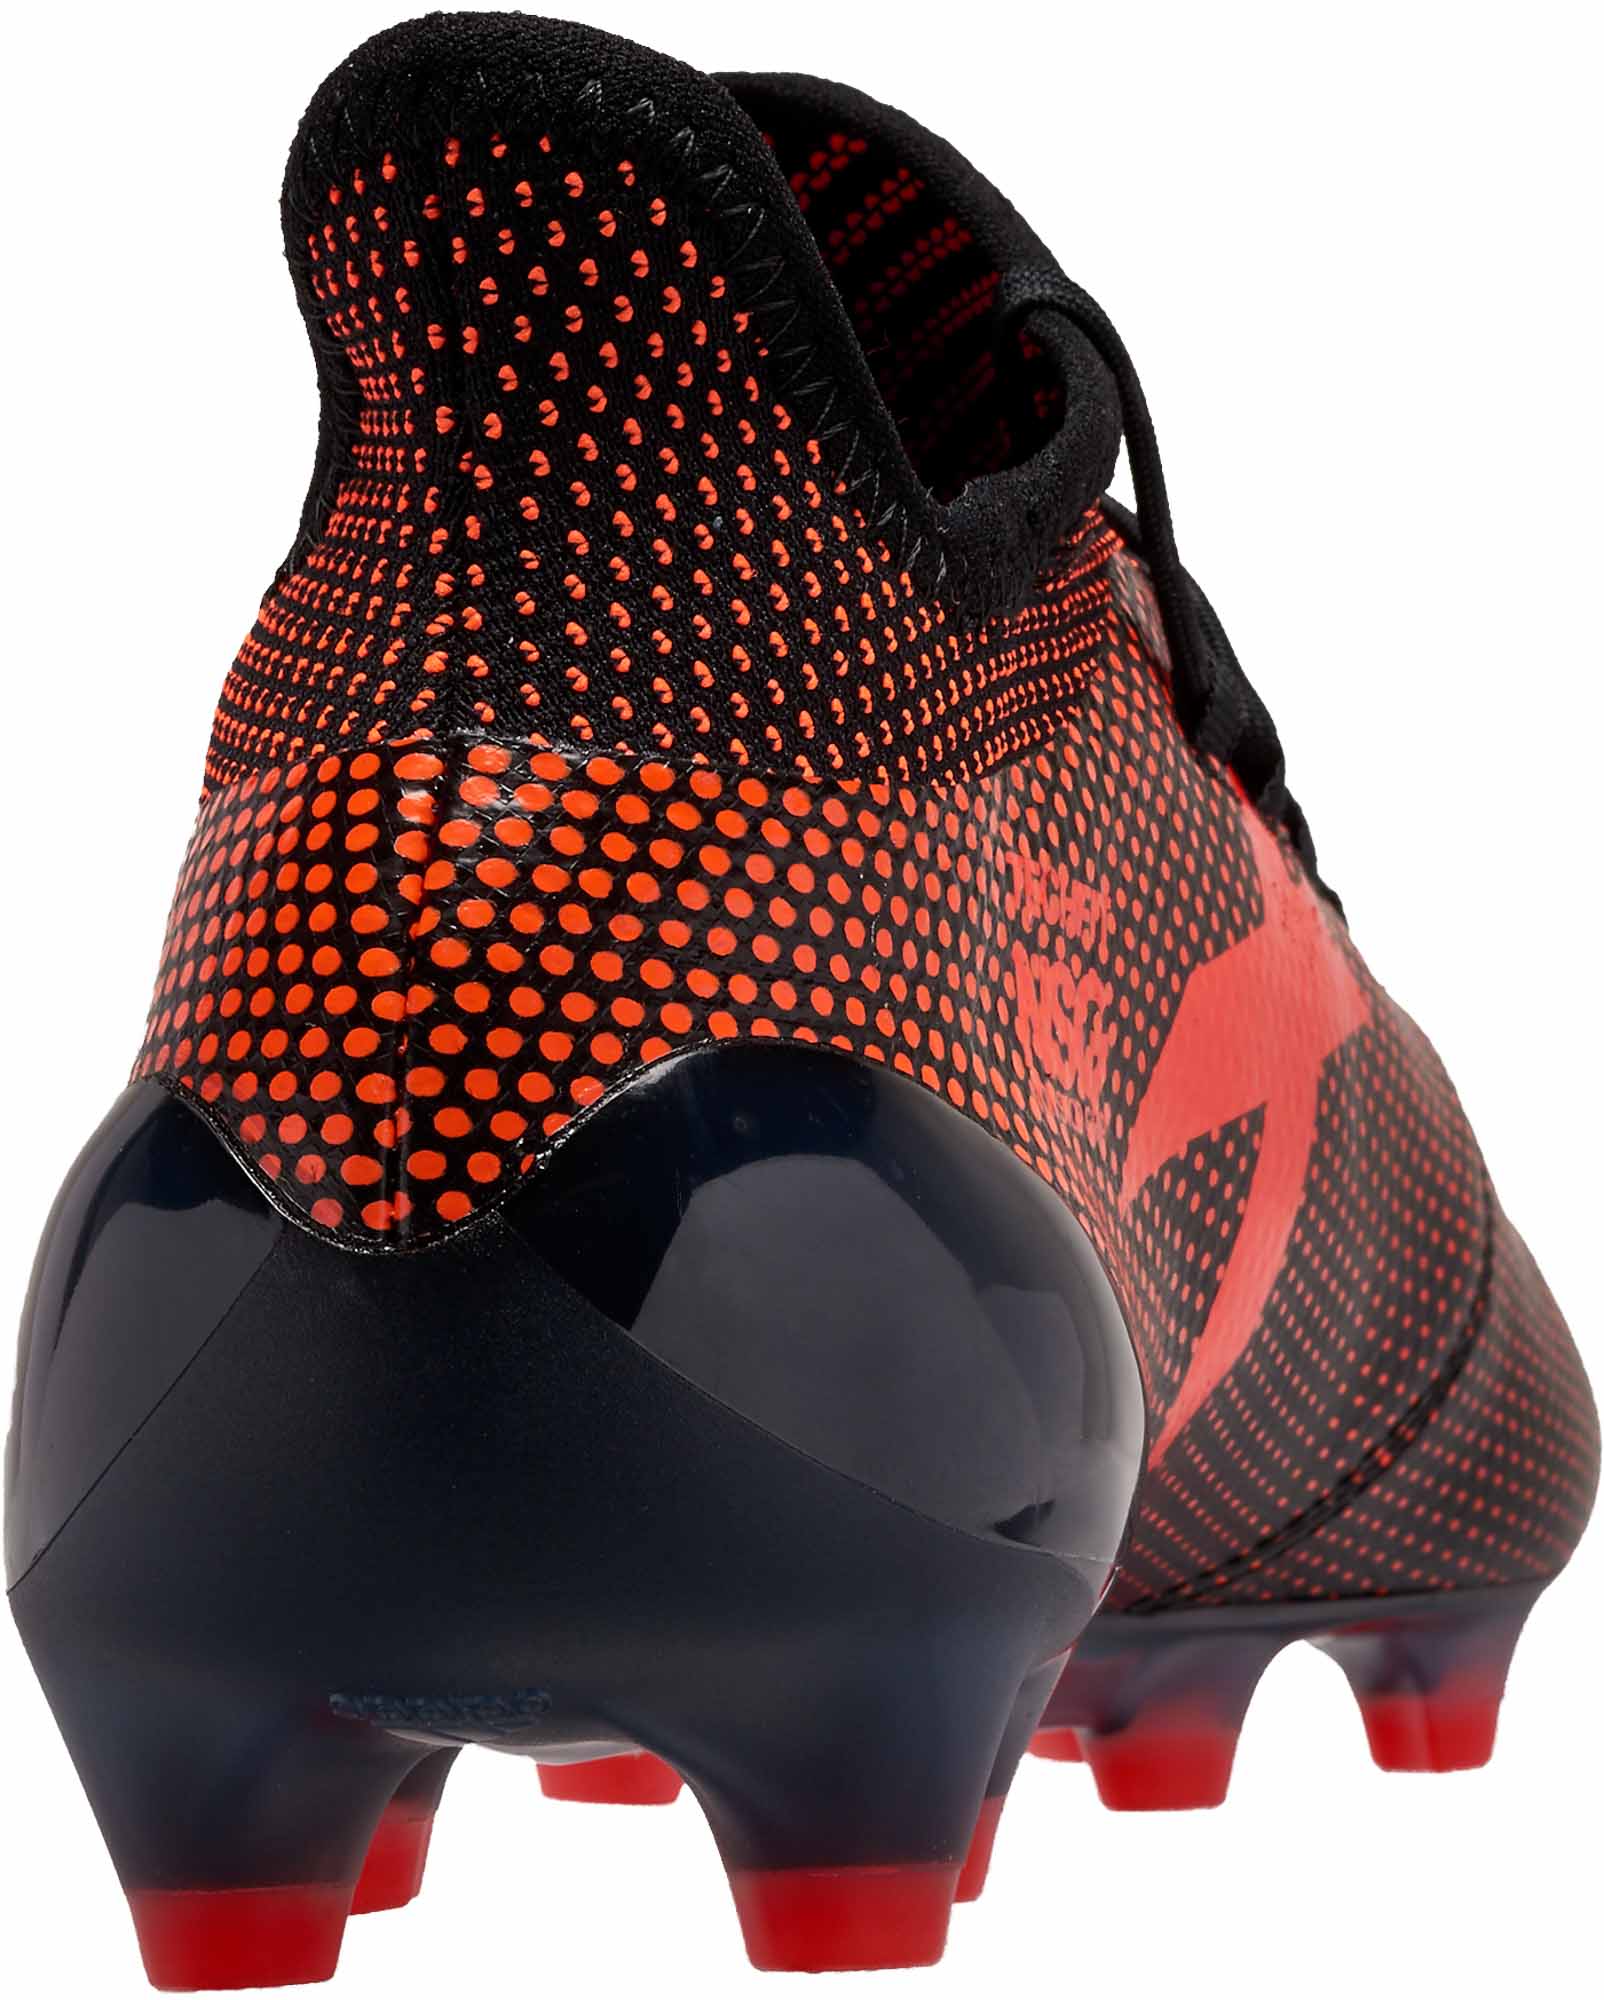 X 17.1 FG - Black adidas Soccer Cleats